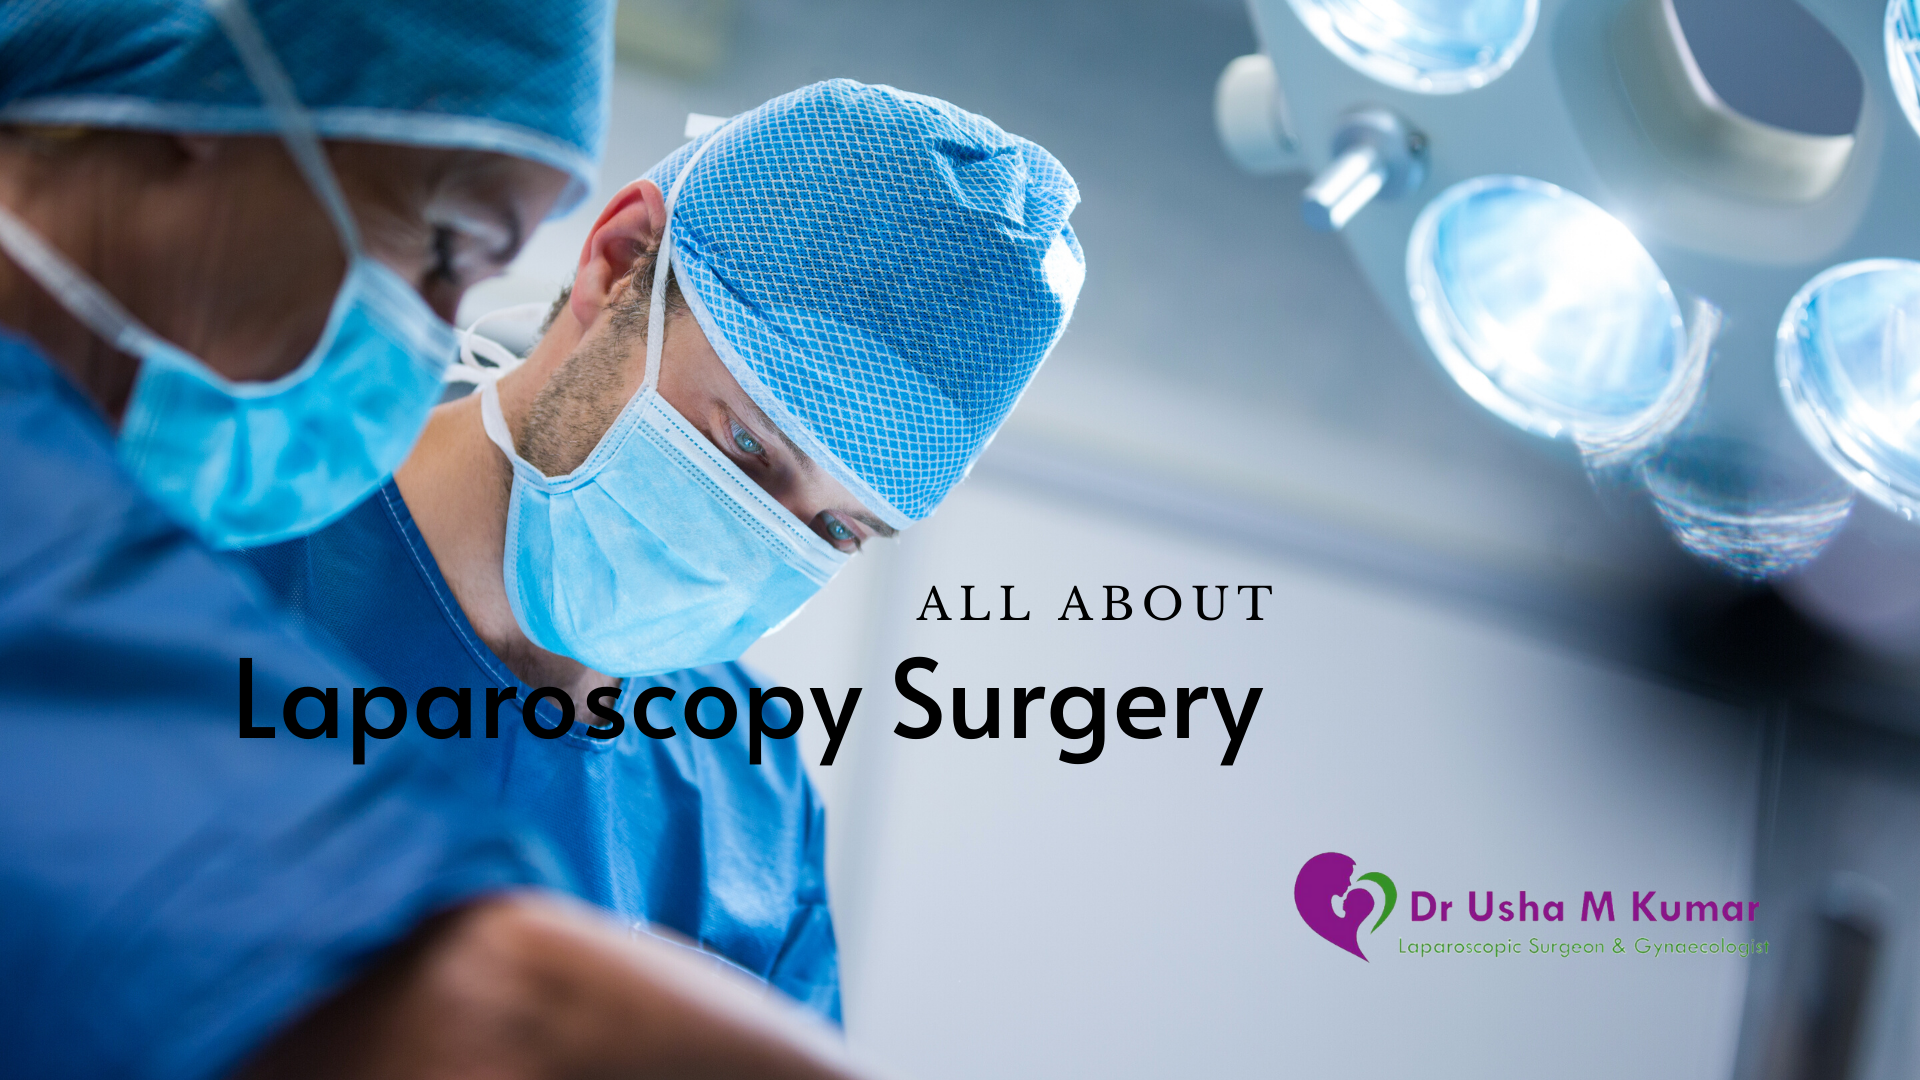 All about Laparoscopy